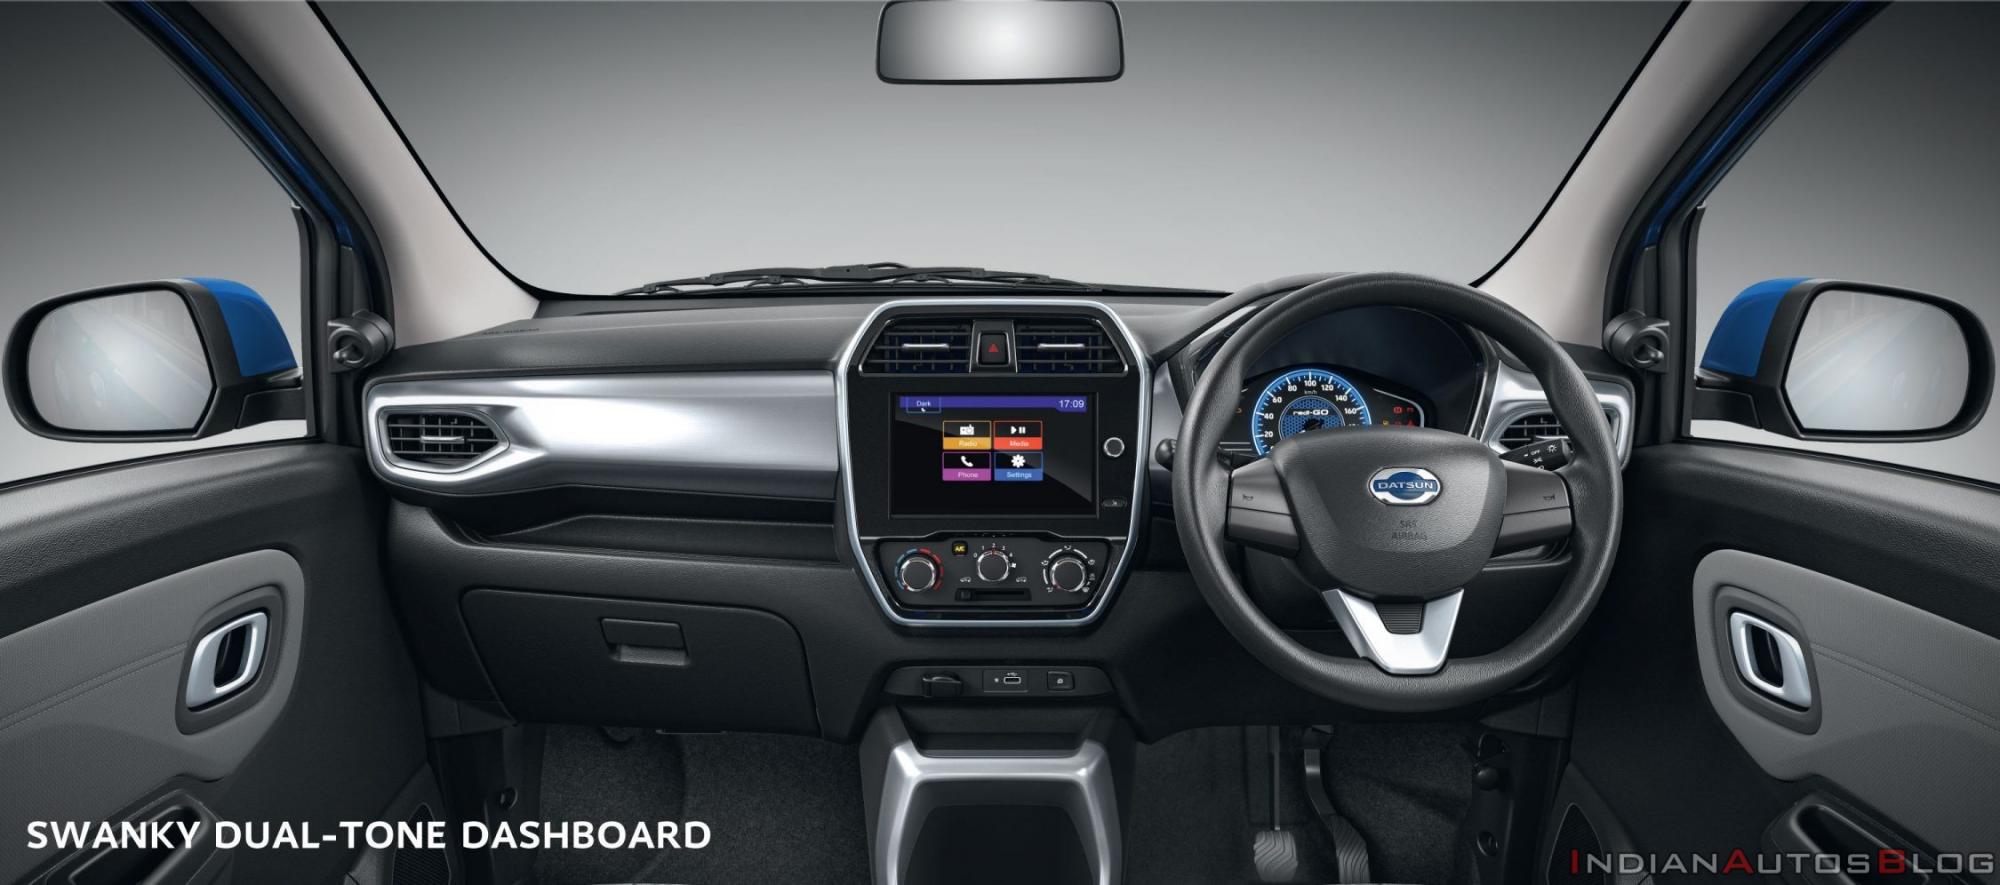 2017 - [Datsun] Redi-Go 2020-datsun-redigo-facelift-interior-dashboard-a63c